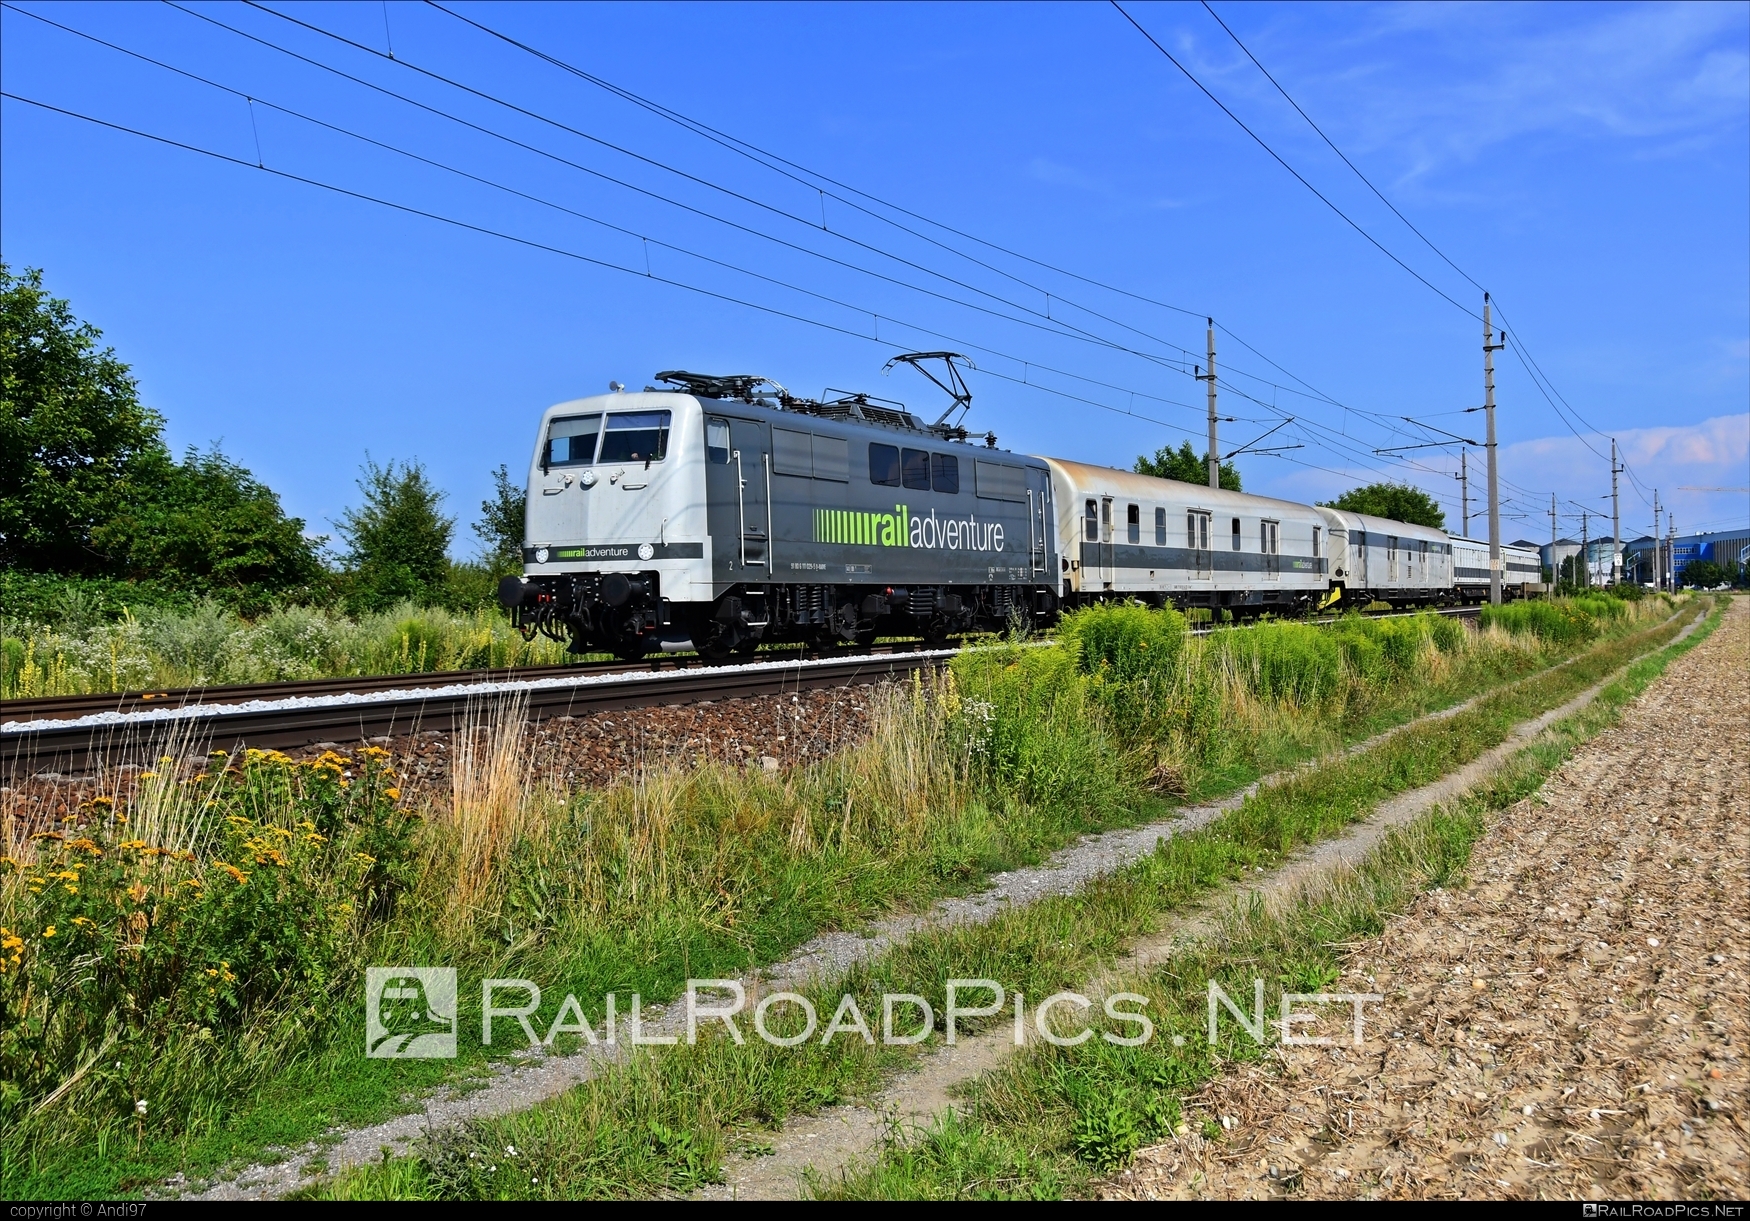 DB Class 111 - 111 029 operated by RailAdventure GmbH #dbClass111 #radve #railadventure